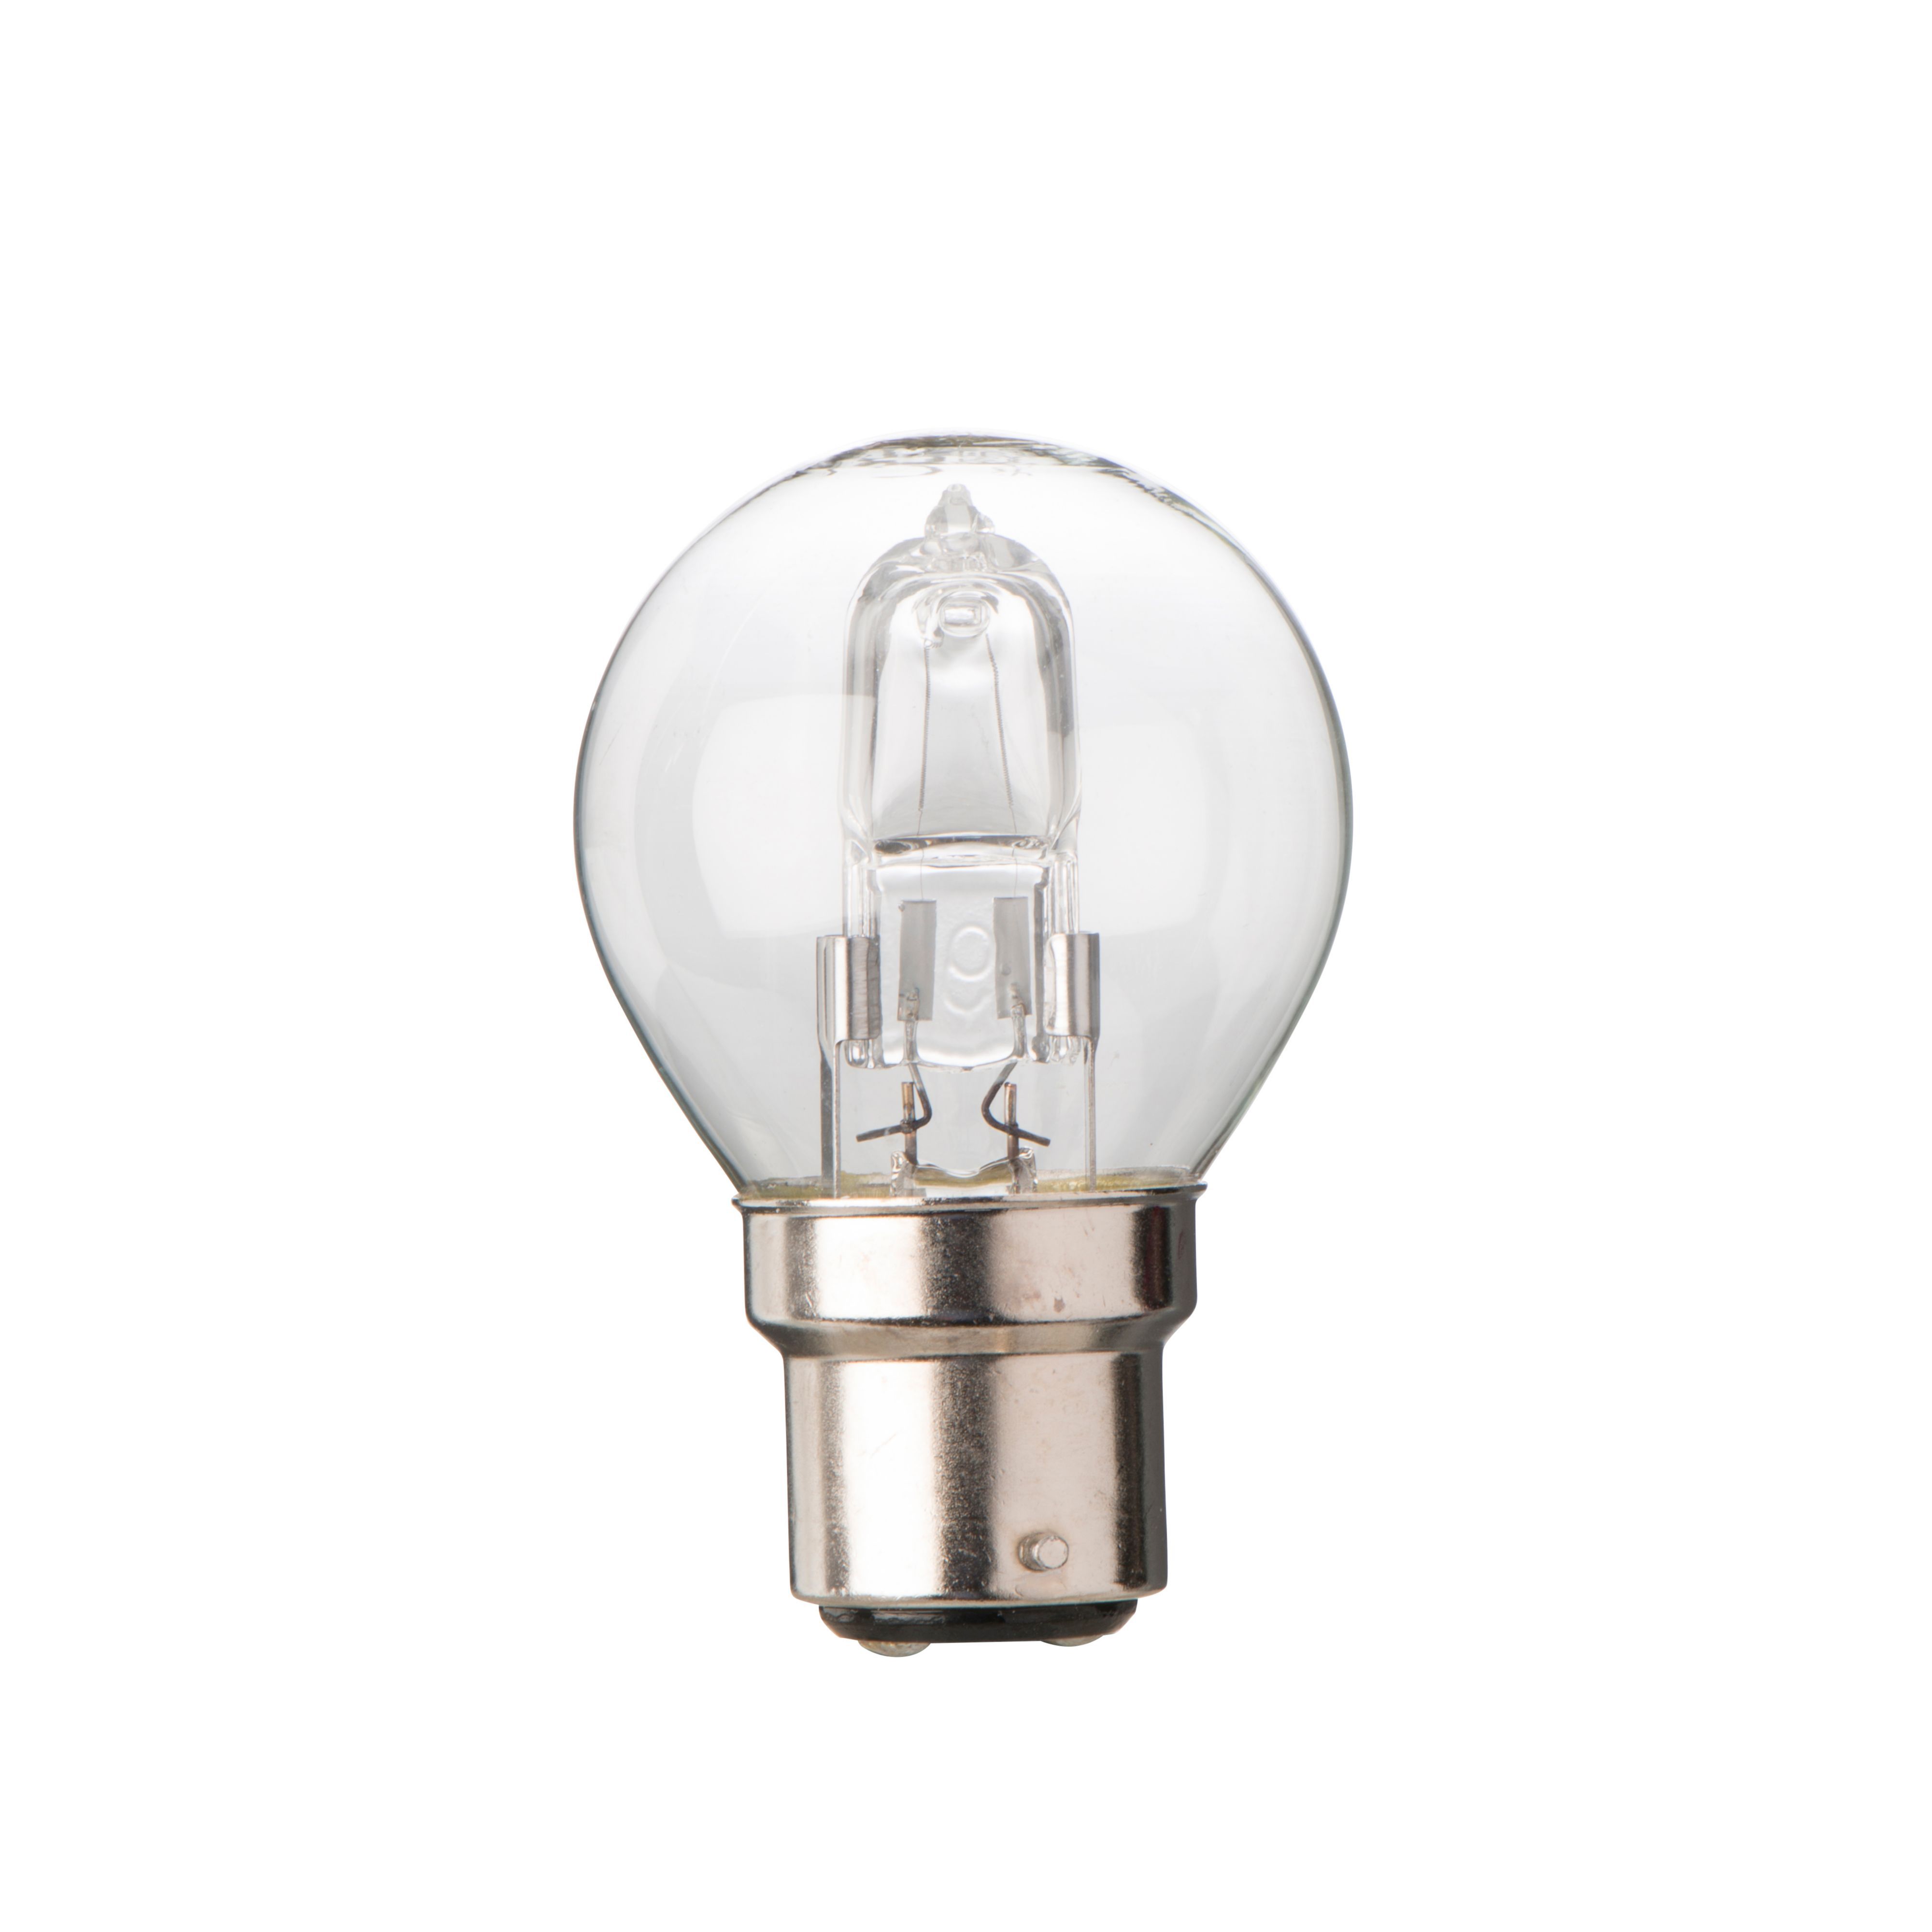 Diall B22 30W Mini globe Halogen Dimmable Light bulb, Pack of 3